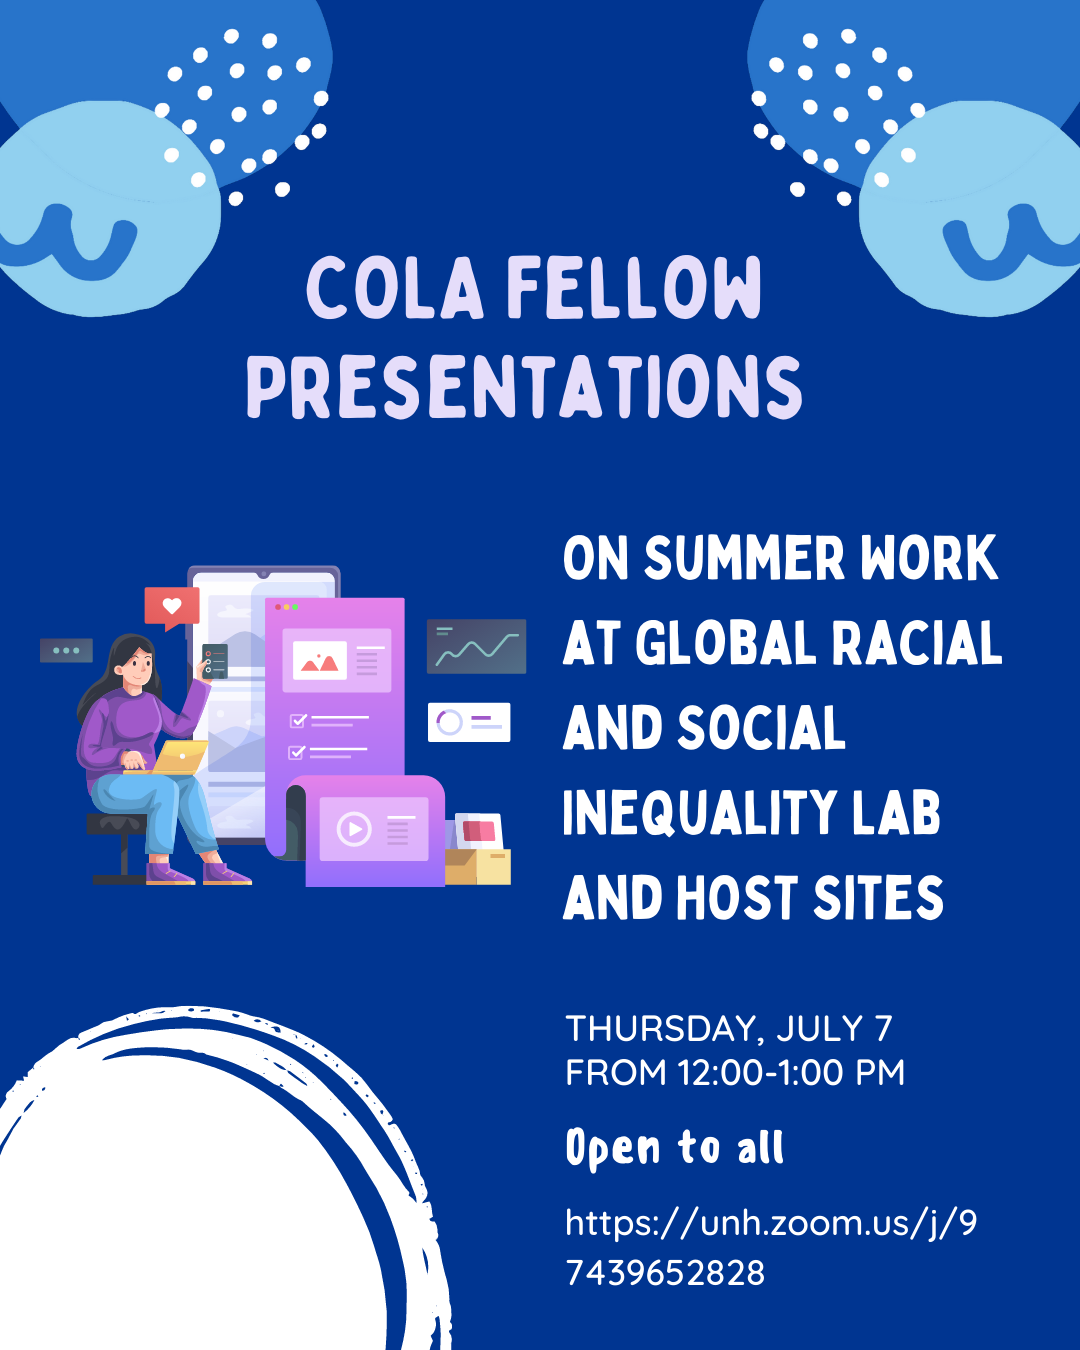 COLA Fellow Presentations image.